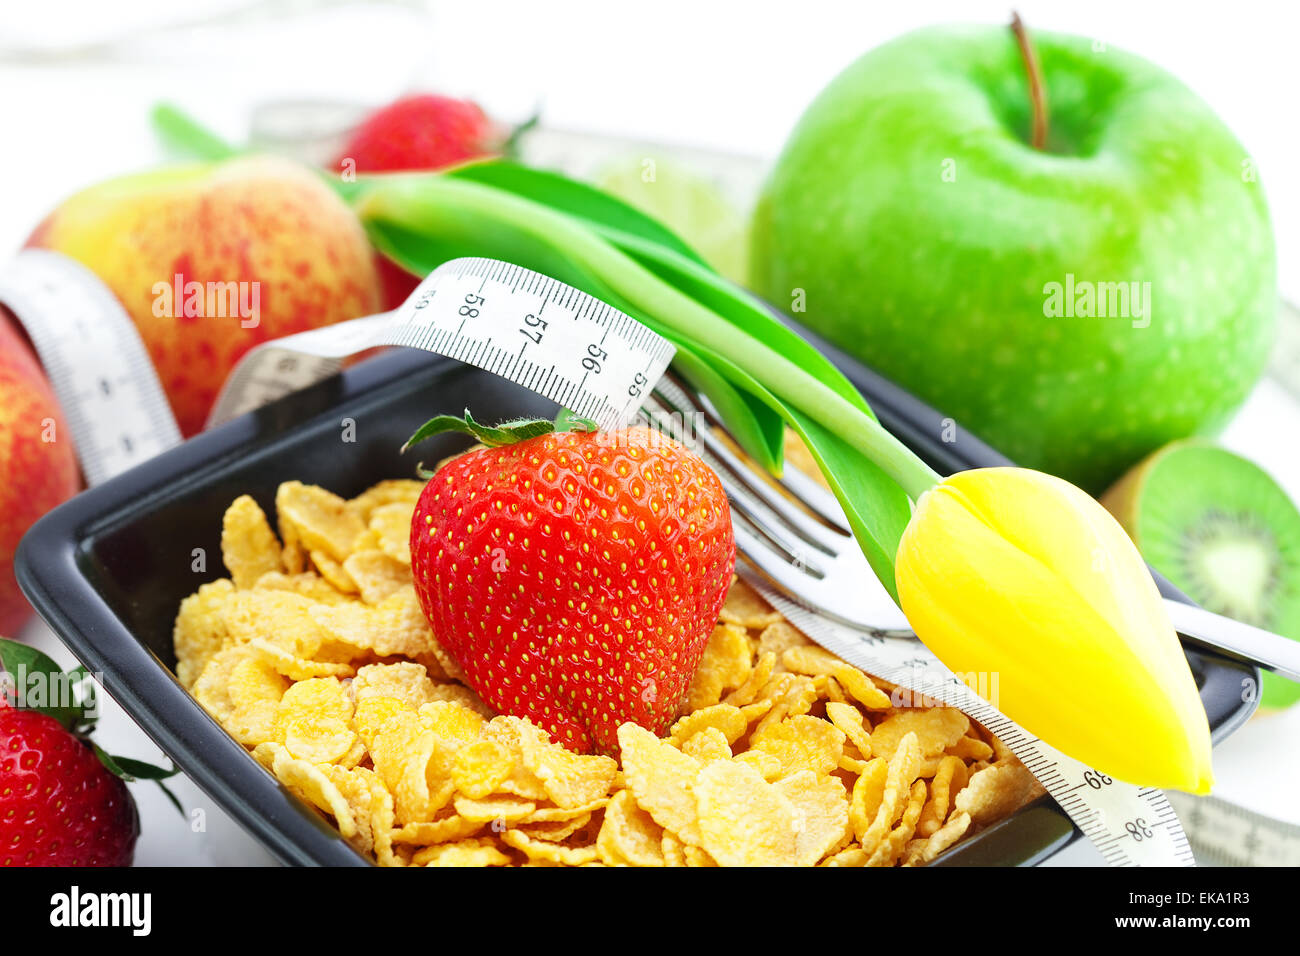 strawberry, peach, apple, kiwi fruit, tulips,measure tape and fl Stock Photo